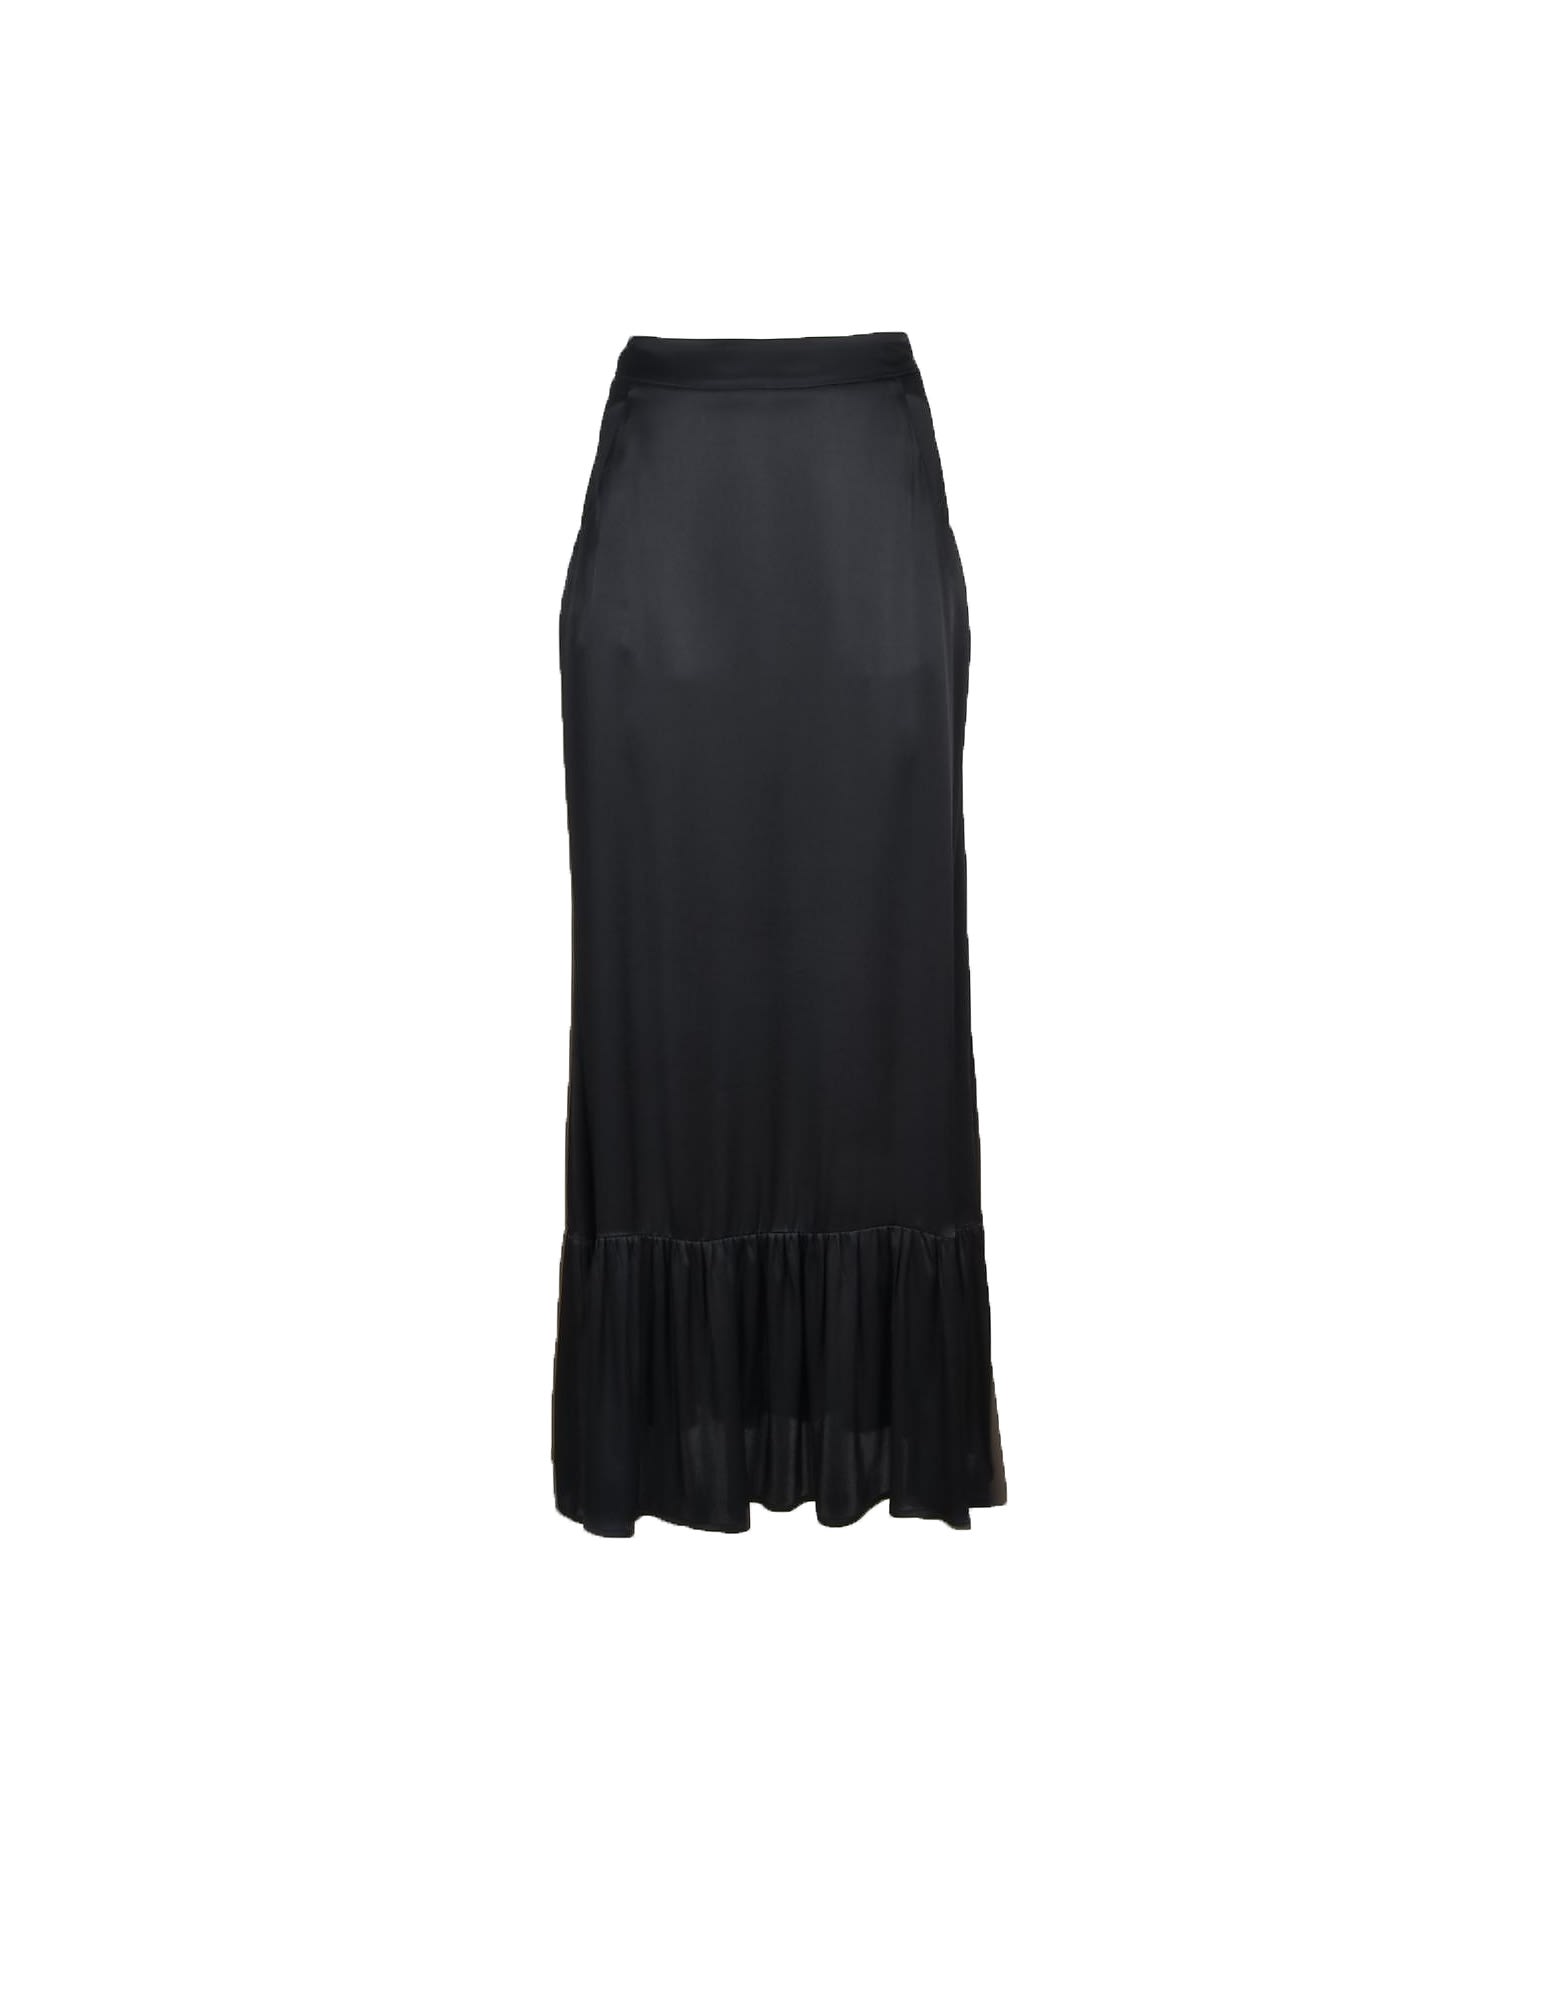 Momonì Momoni Womens Black Skirt